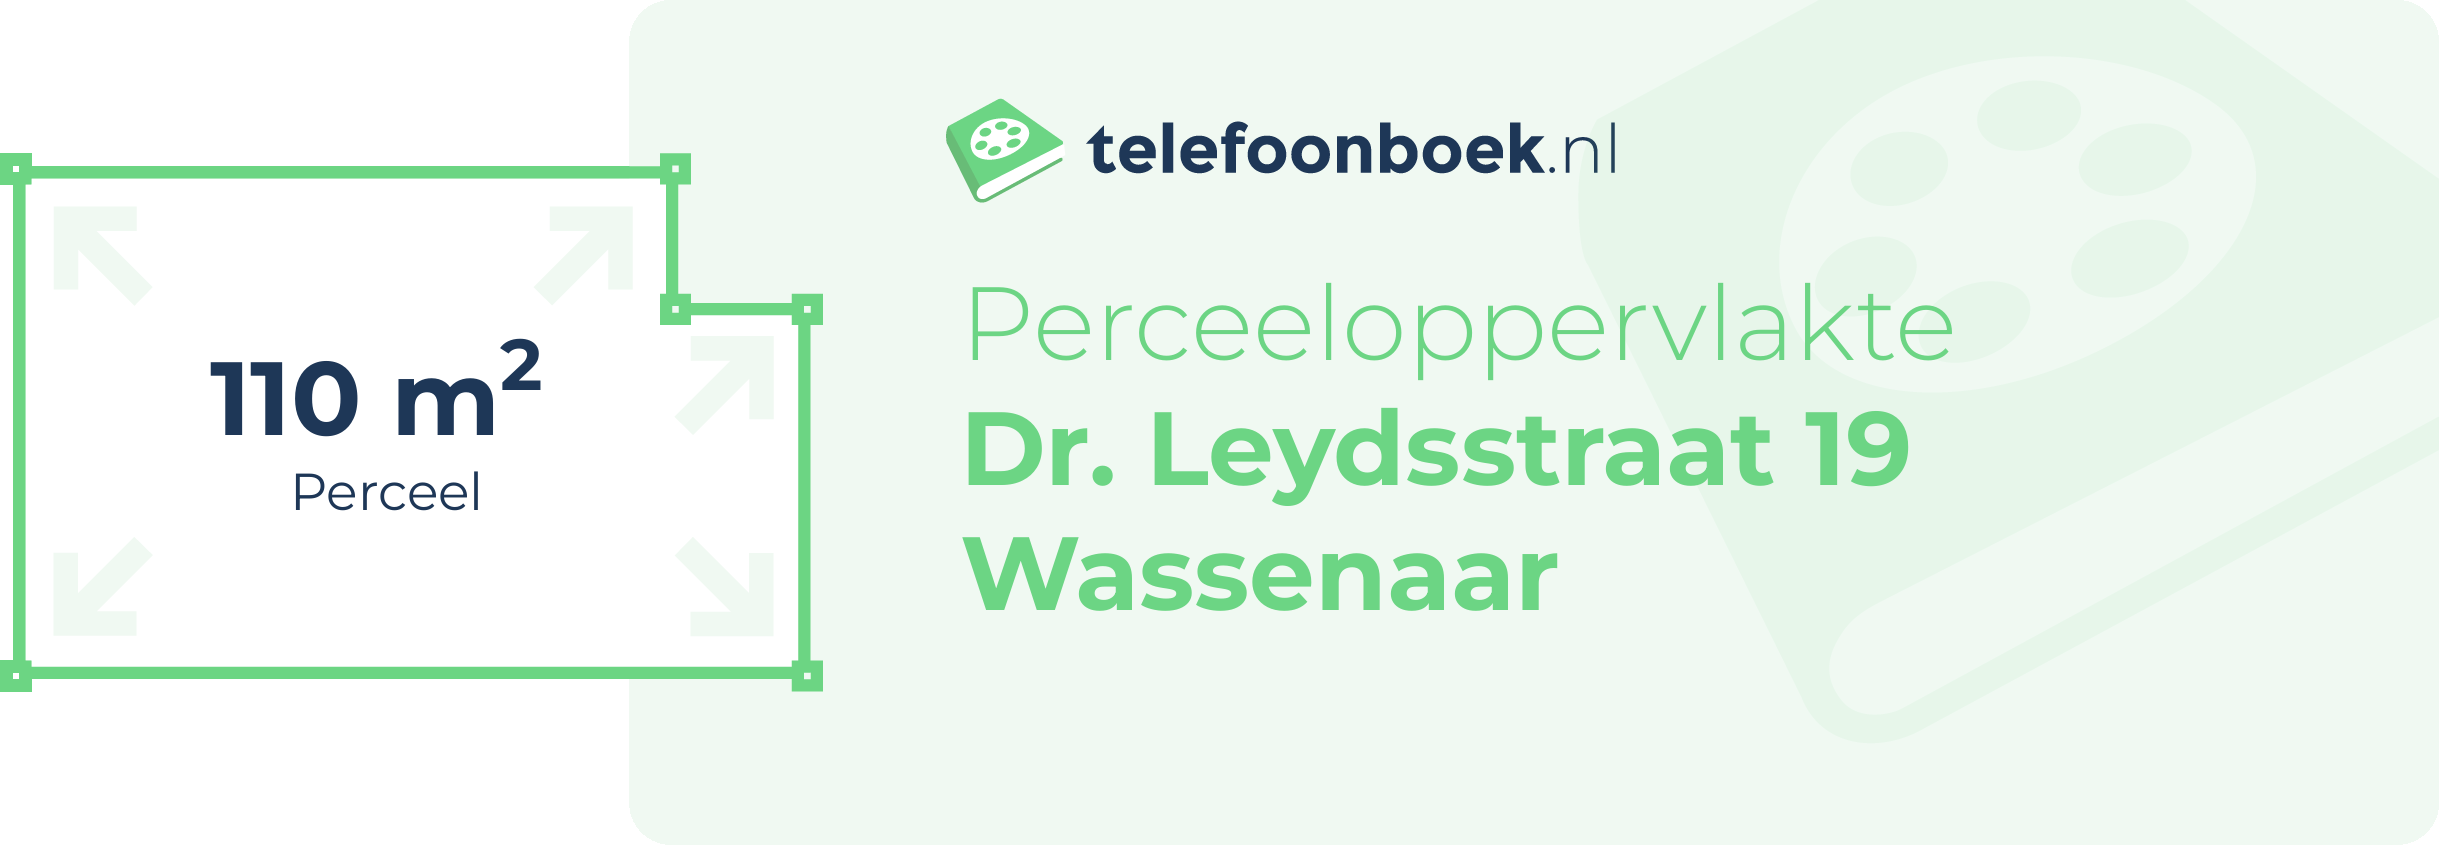 Perceeloppervlakte Dr. Leydsstraat 19 Wassenaar